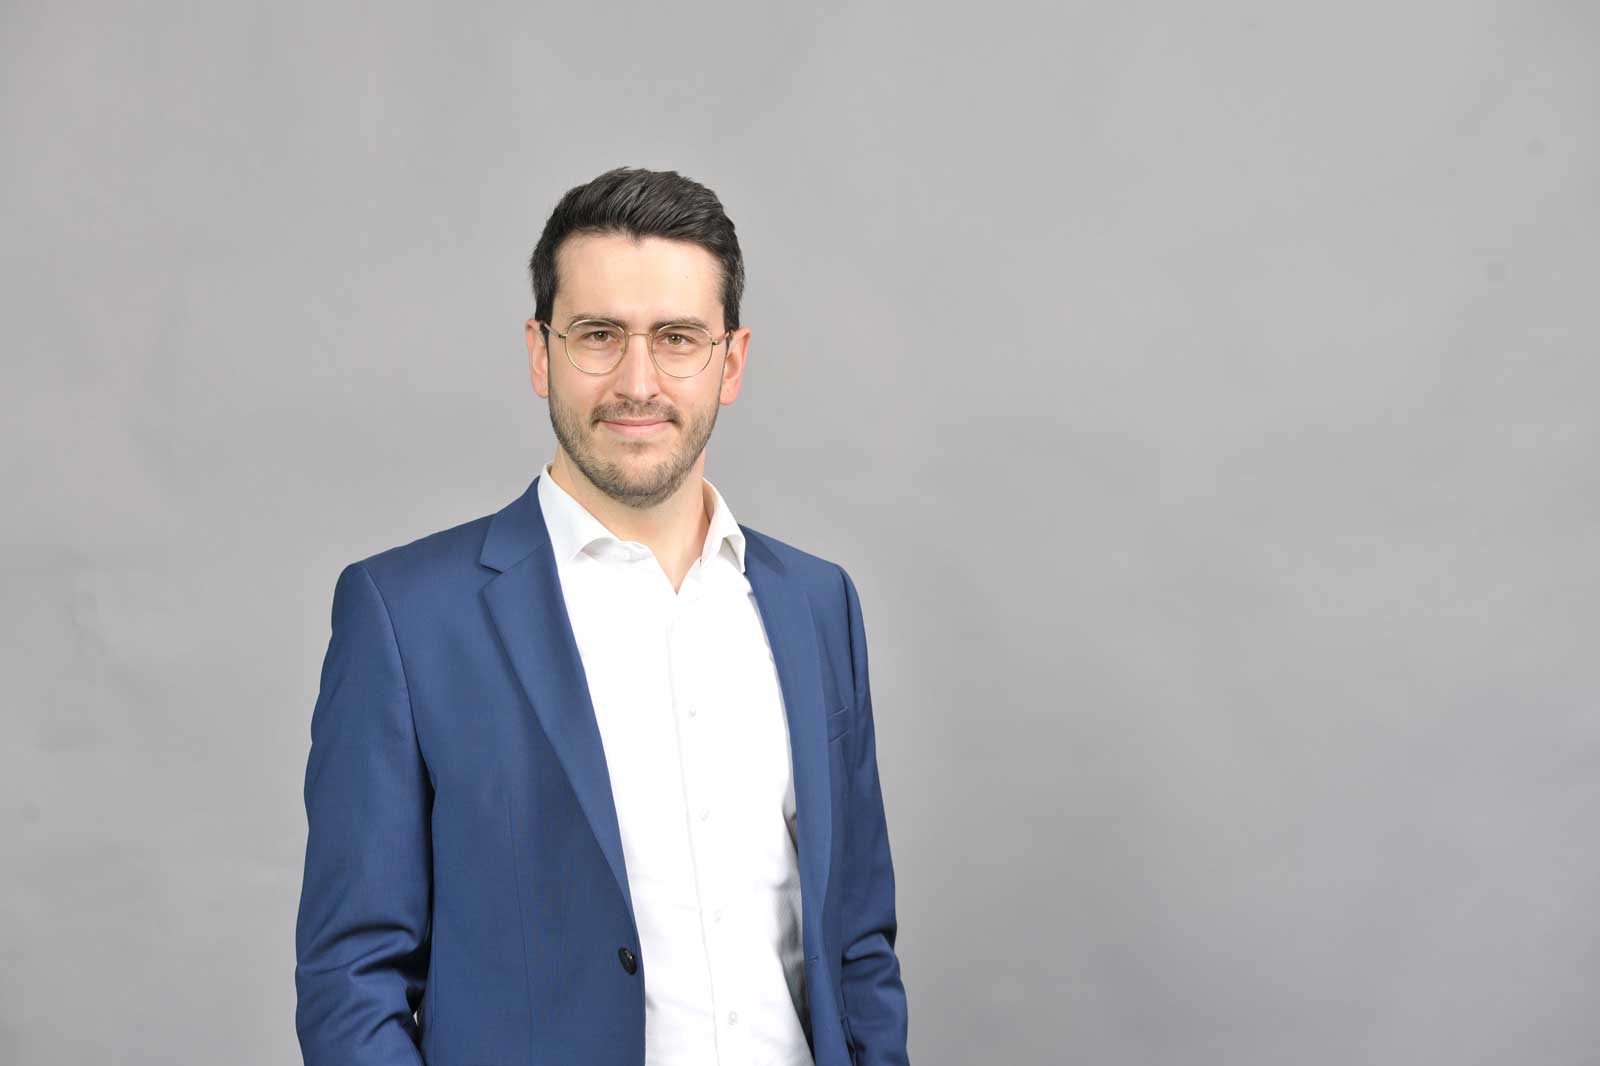 Nicolas Schewietzek | Contract- & Claim Manager @ RWE Technology GmbH